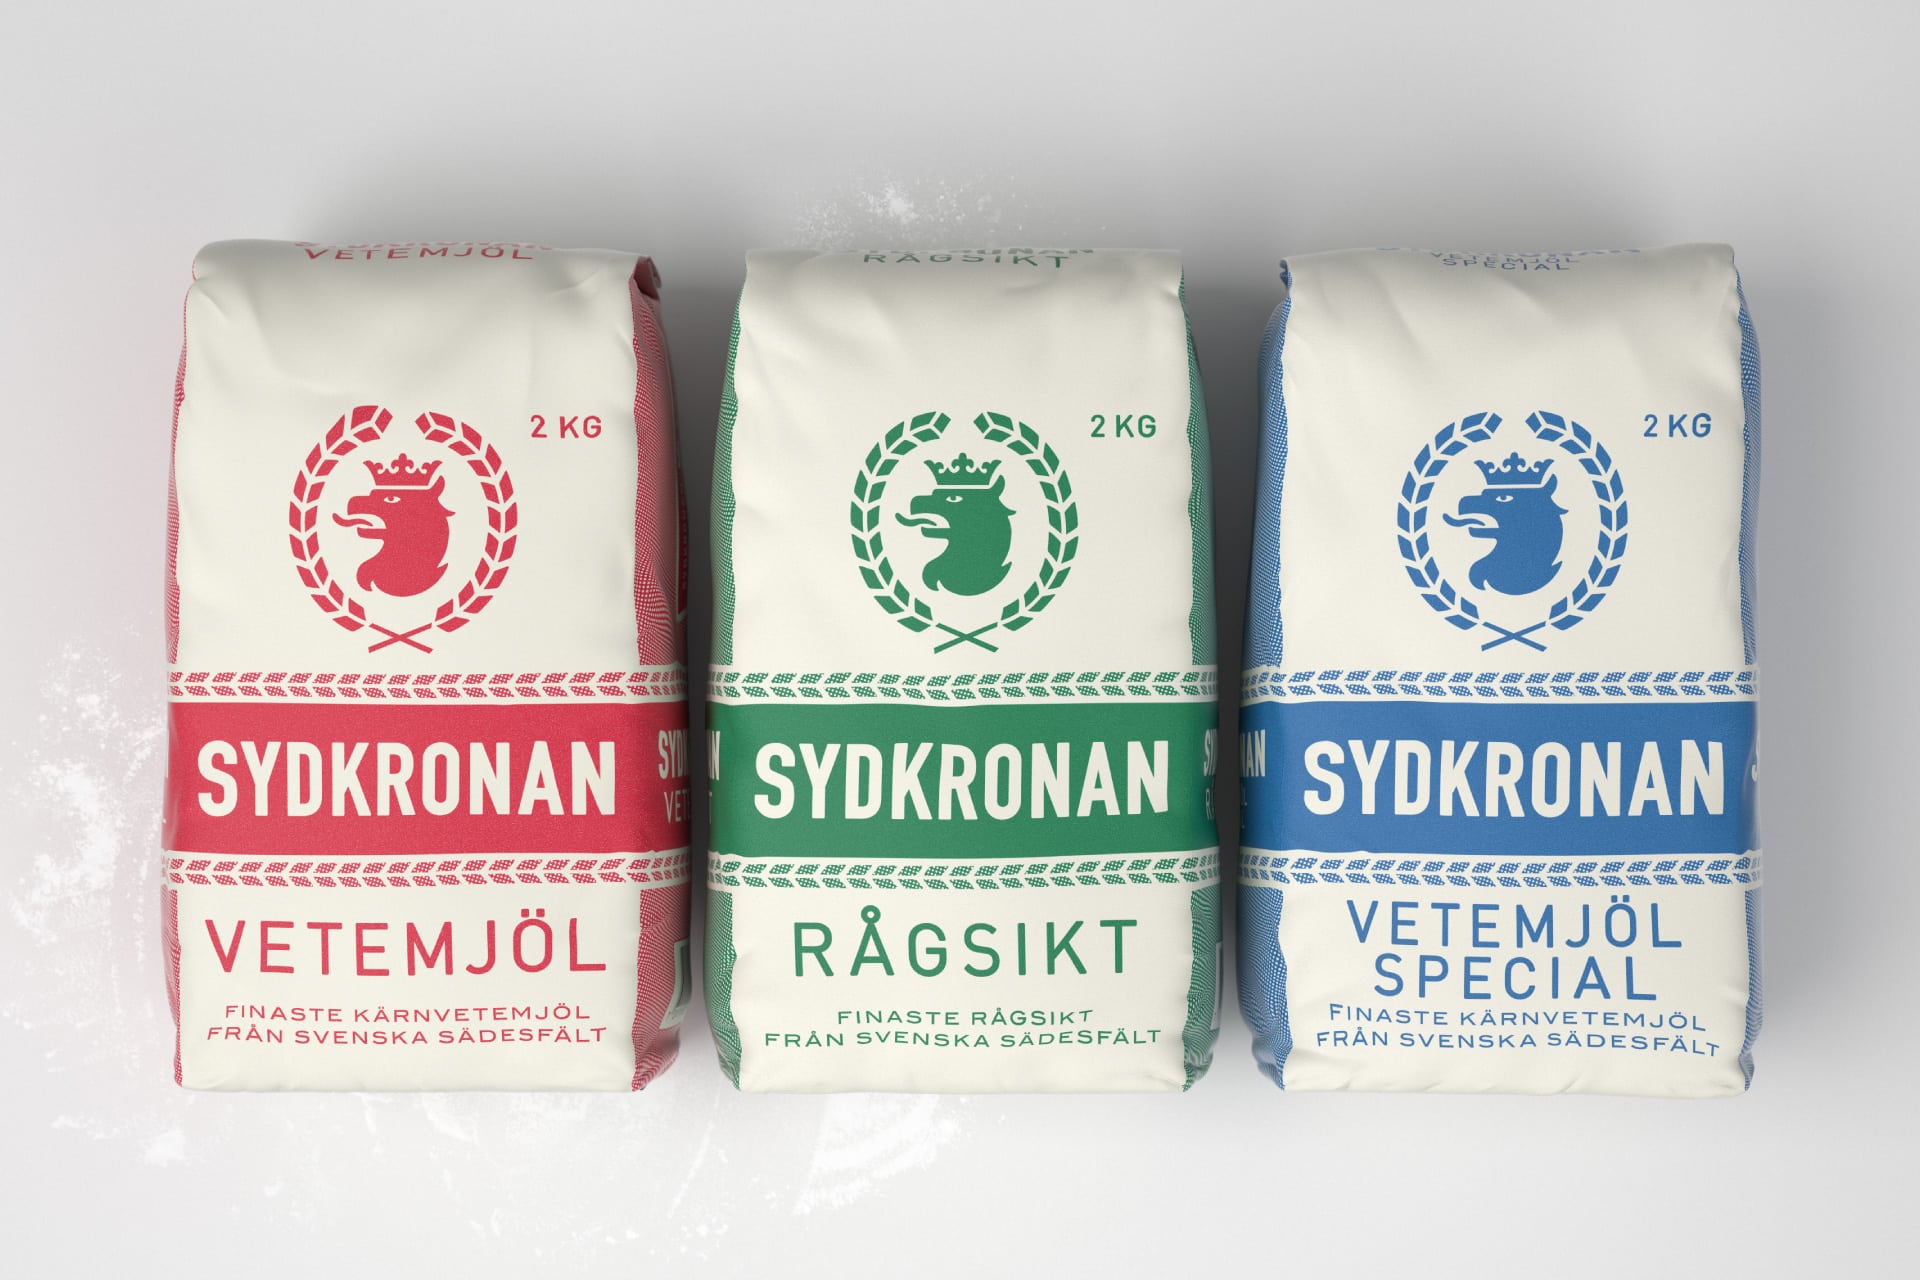 2017 graphic print design trends vintage authentic modern packaging design sydkronan